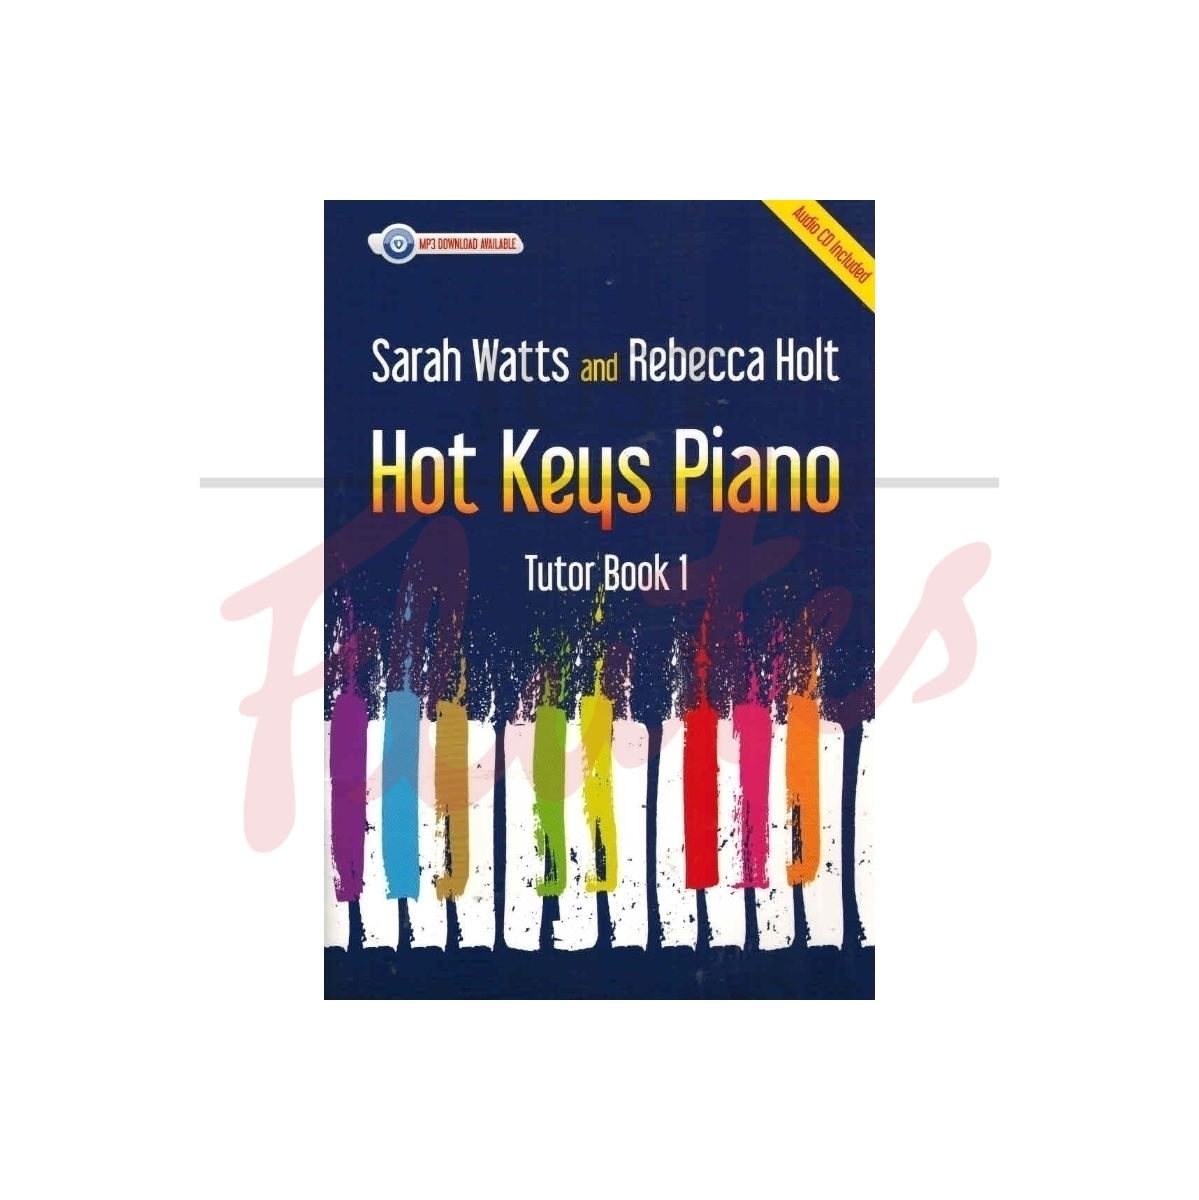 Hot Keys Piano Tutor Book 1